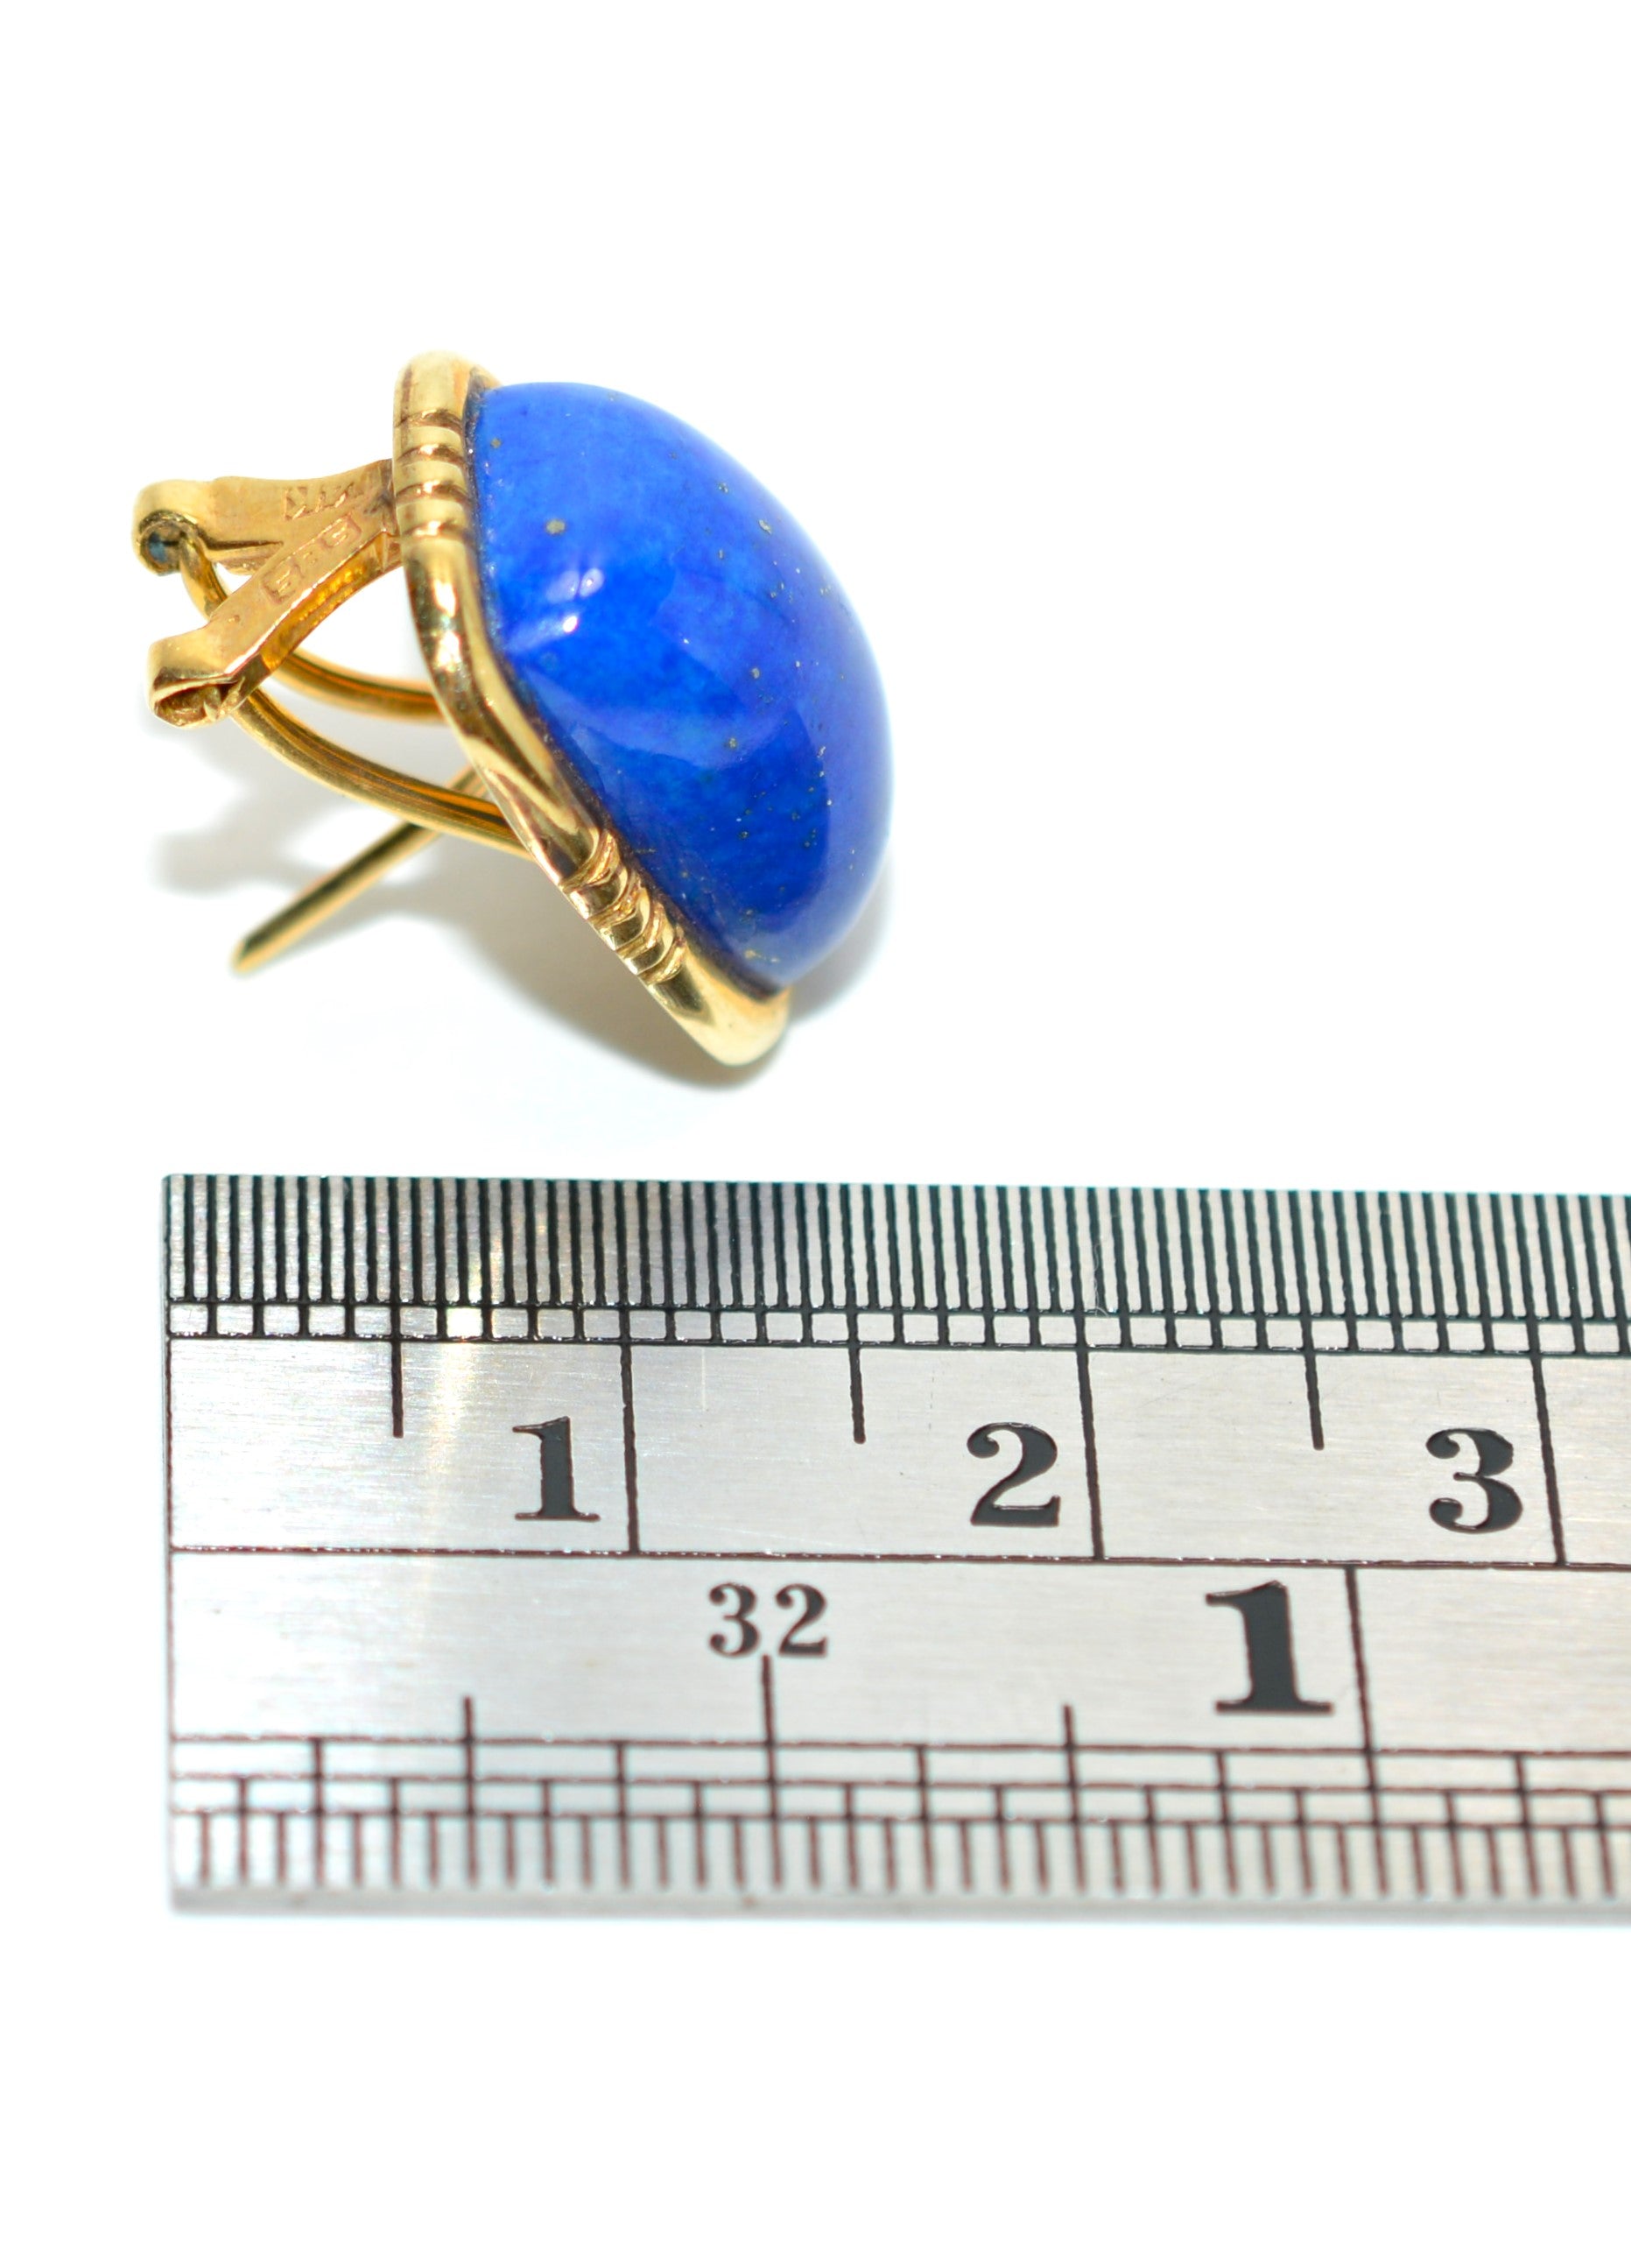 Natural Lapis Lazuli Earrings 14K Solid Gold Earrings Statement Earrings Vintage Earrings Hinged Lever Back Earrings Fine Estate Jewellery